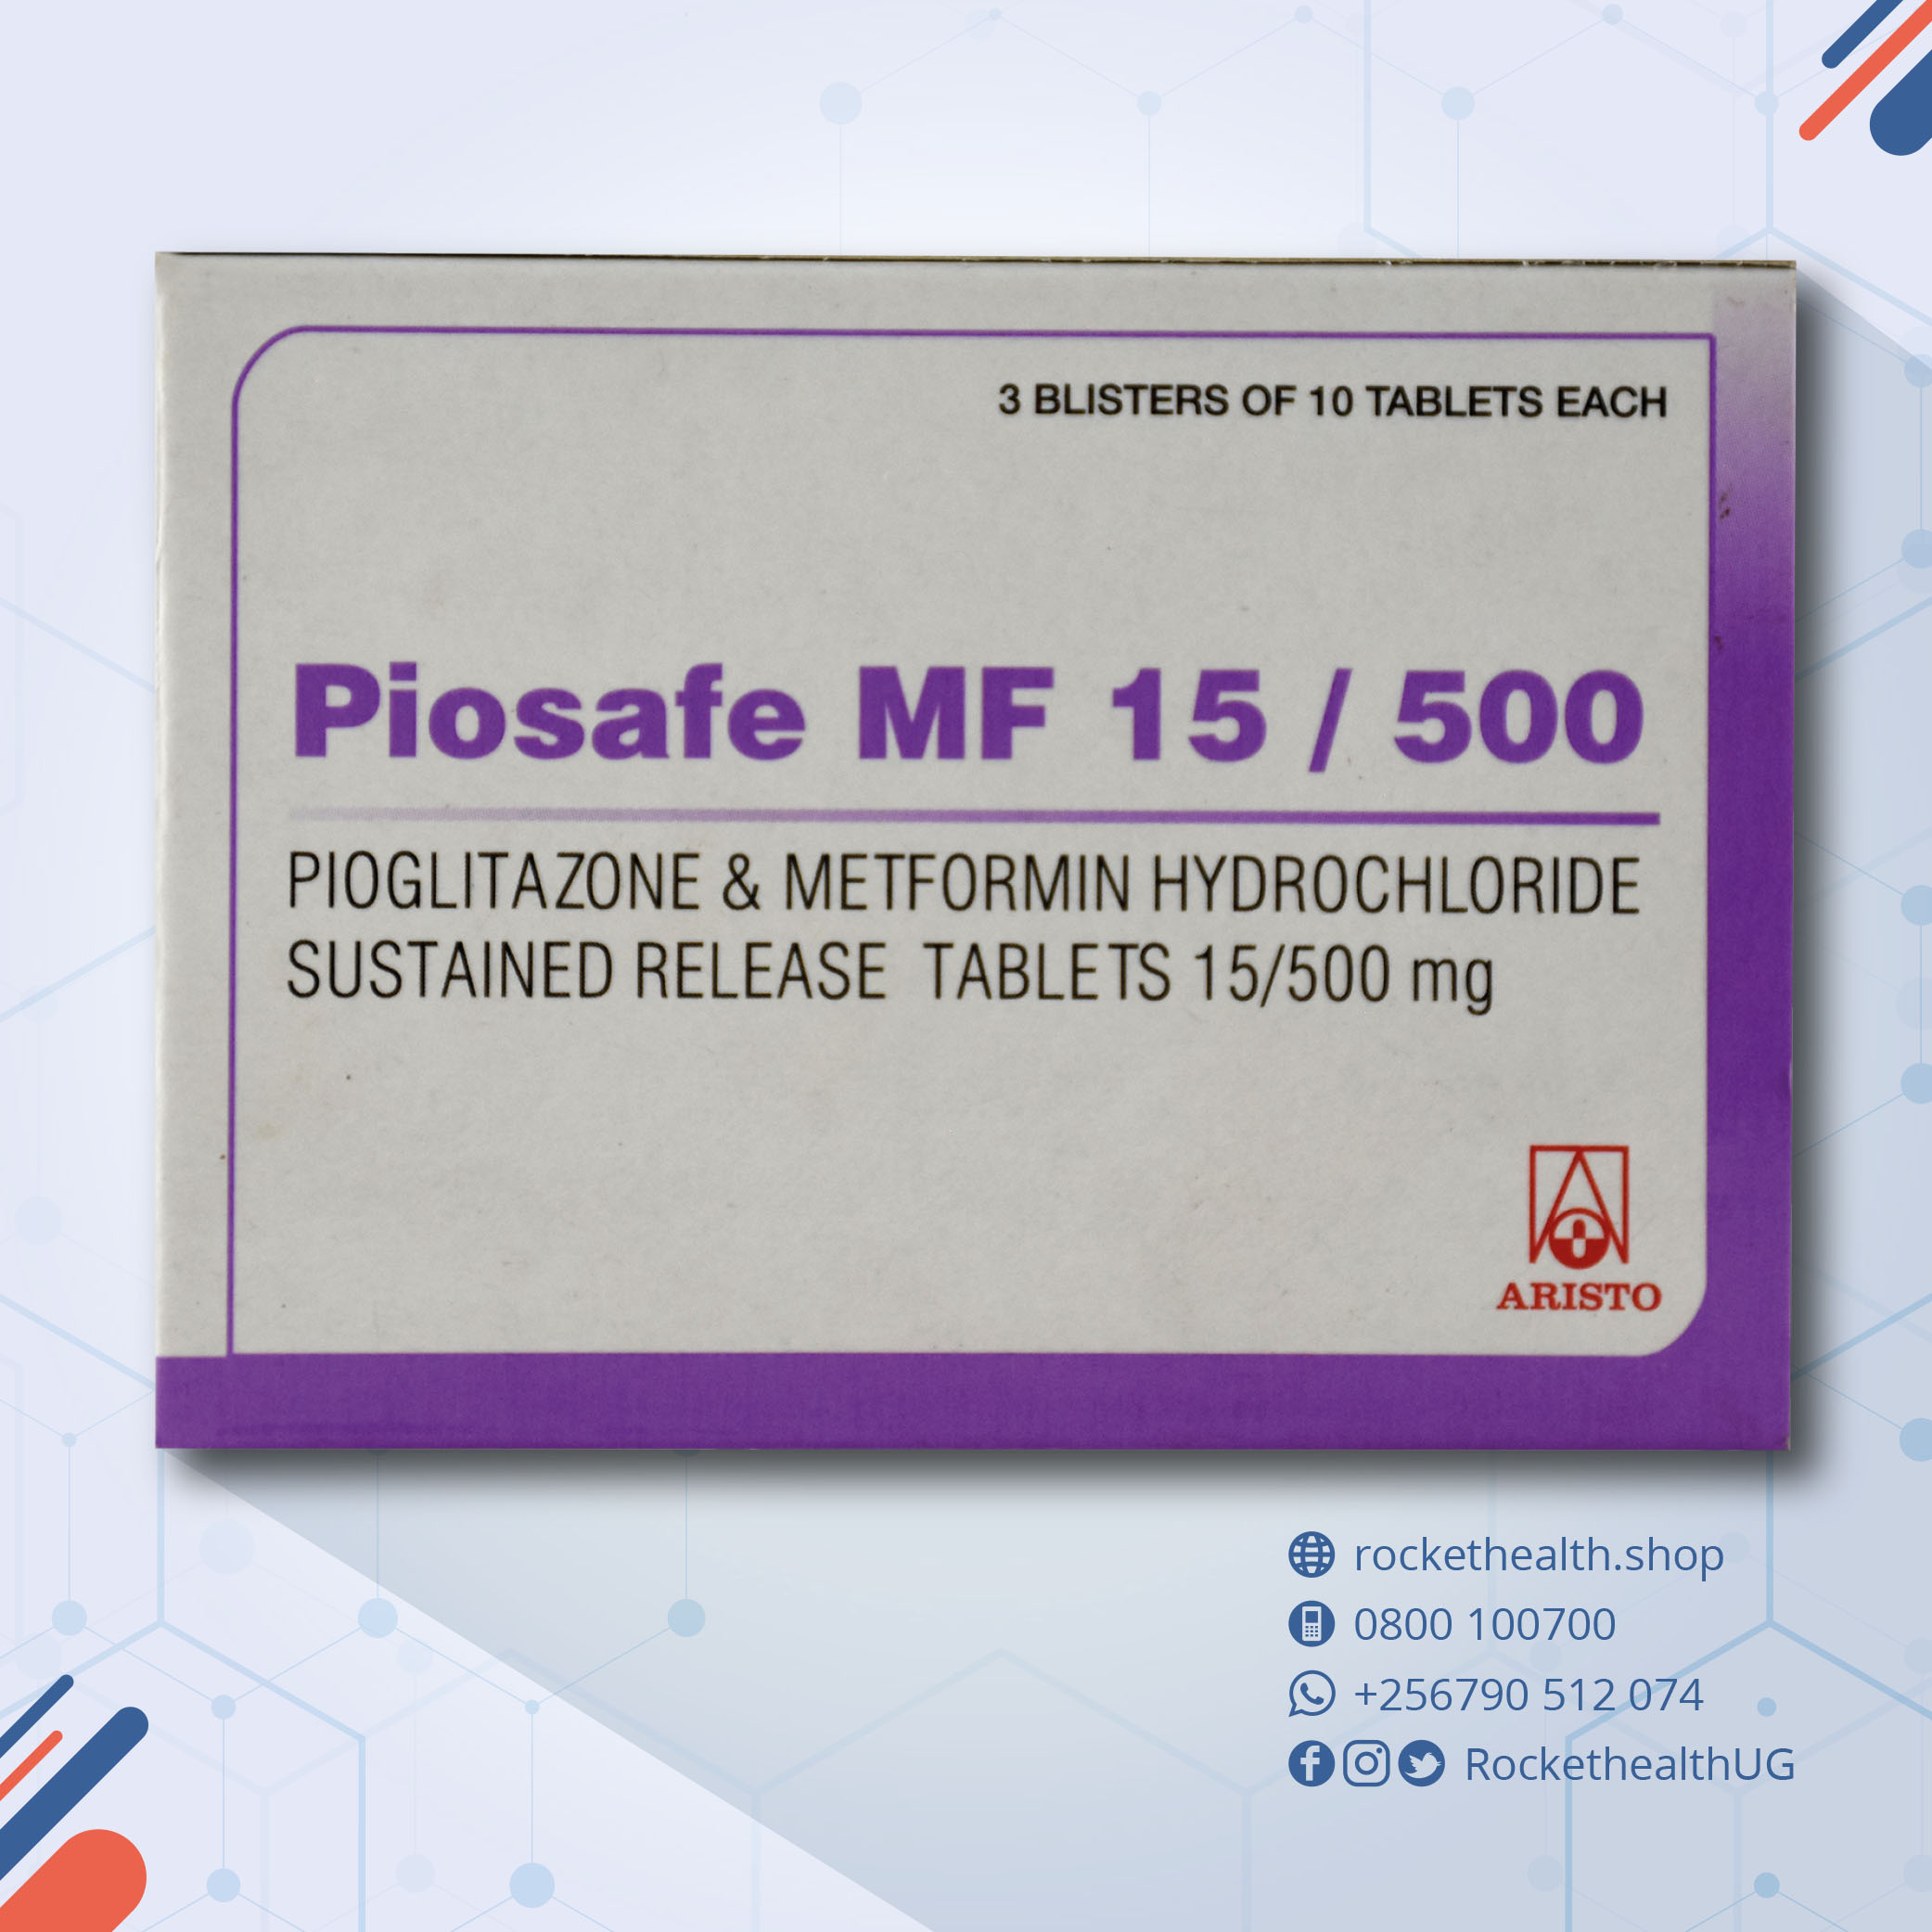 Pioglitazone Metformin Tablet Piosafe Mf 500 15mg 10 S Rocket Health